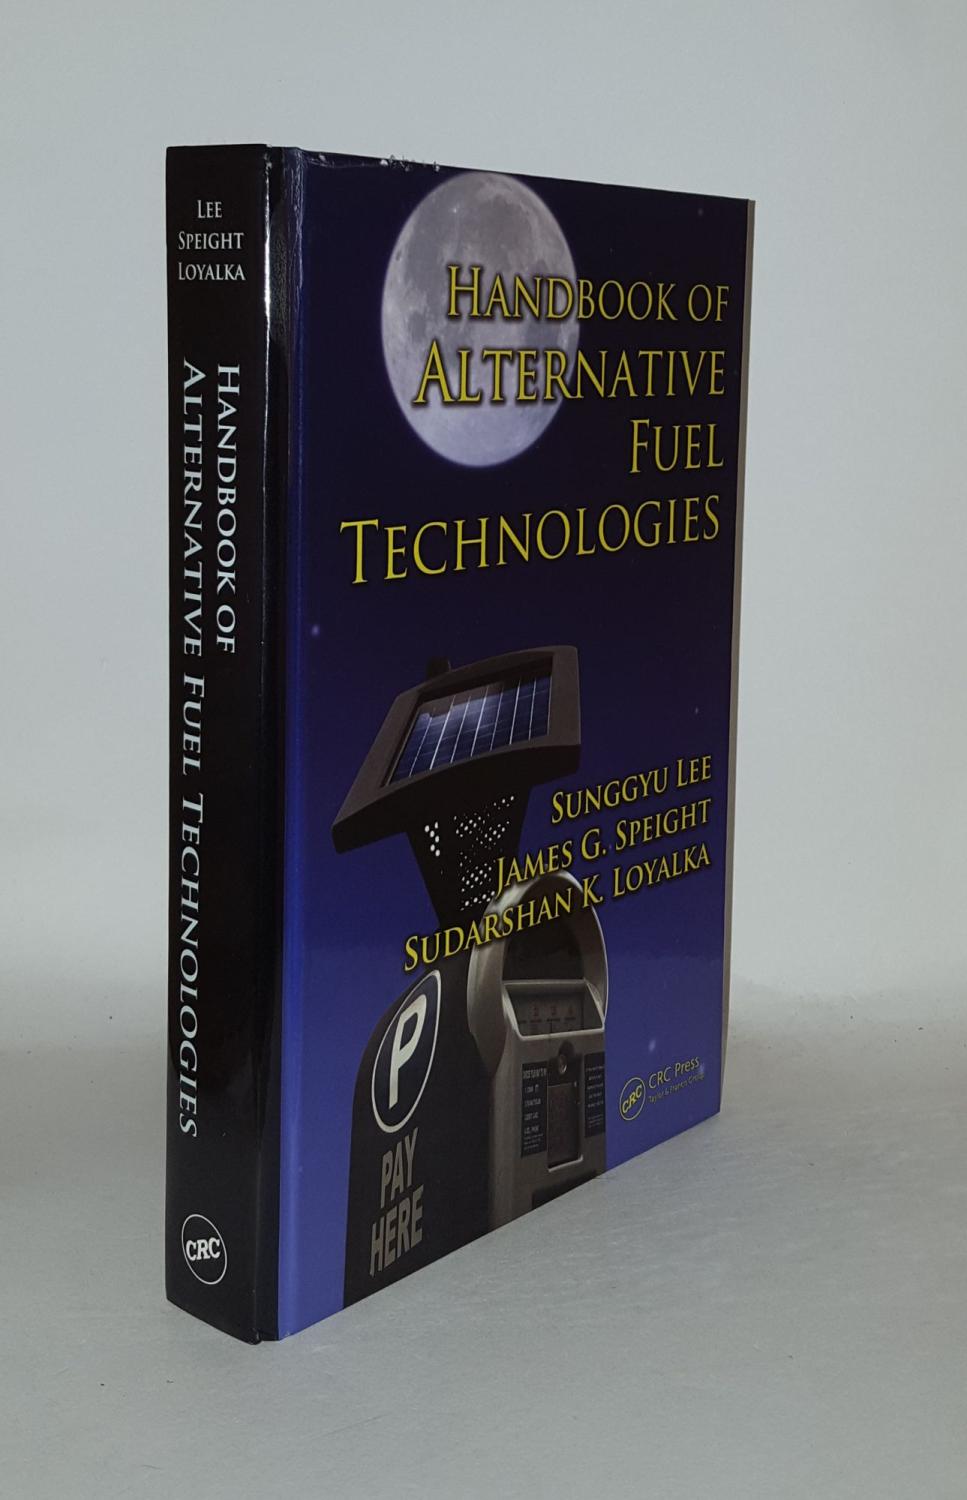 HANDBOOK OF ALTERNATIVE FUEL TECHNOLOGIES - LEE Sunggyu, SPEIGHT James G., LOYALKA Sudarshan K.